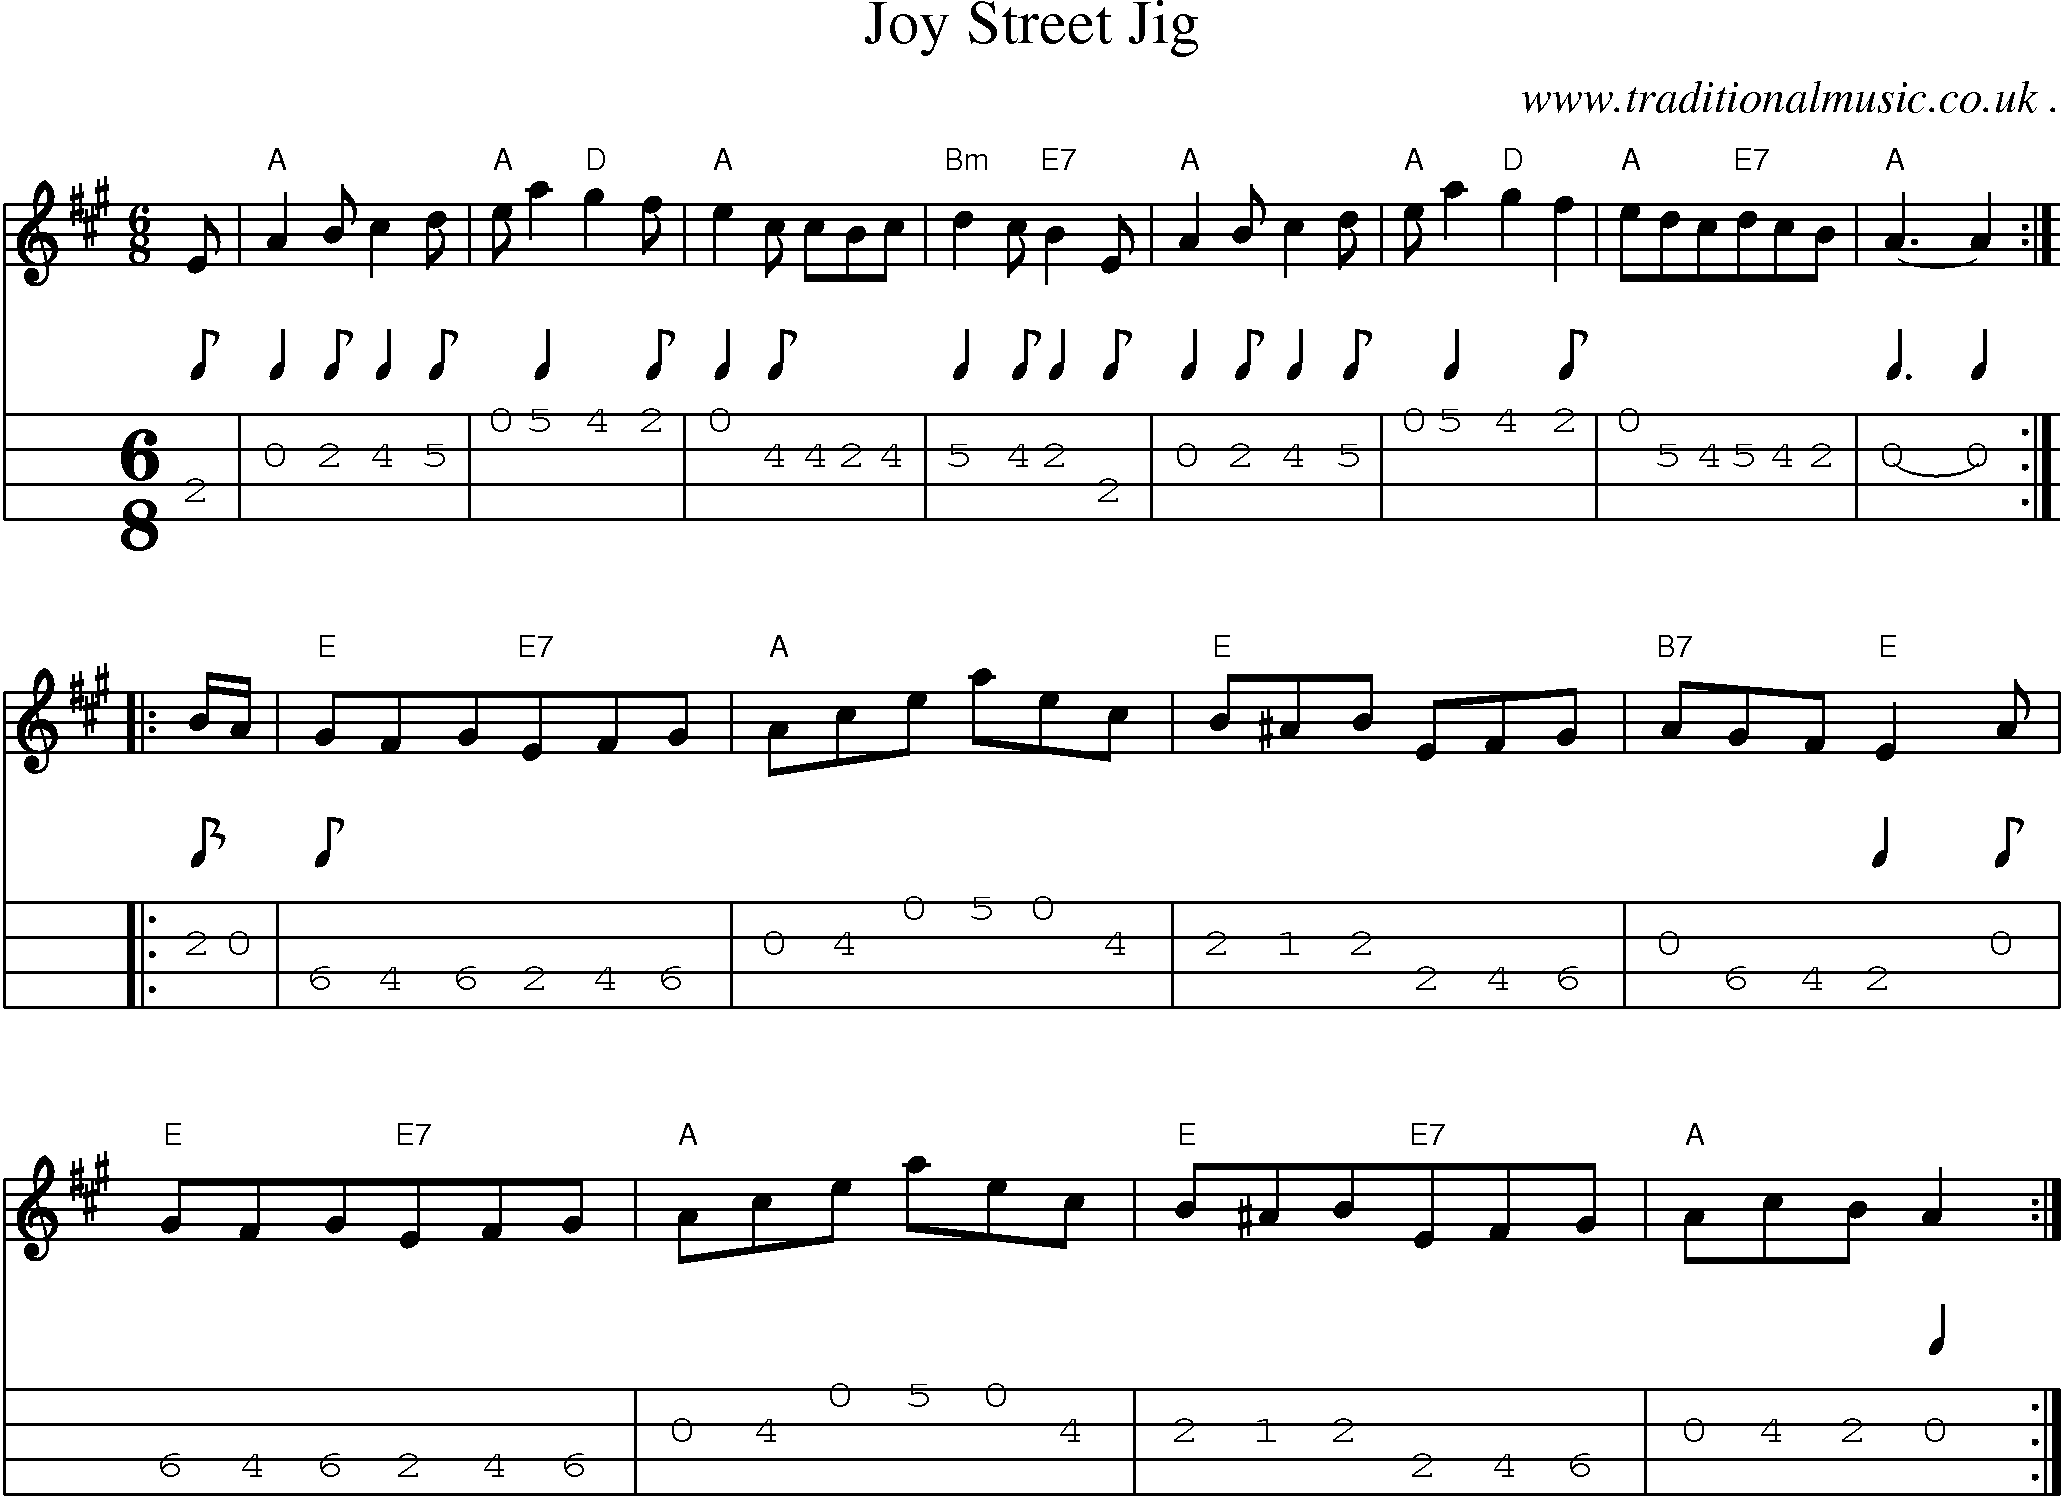 Sheet-Music and Mandolin Tabs for Joy Street Jig